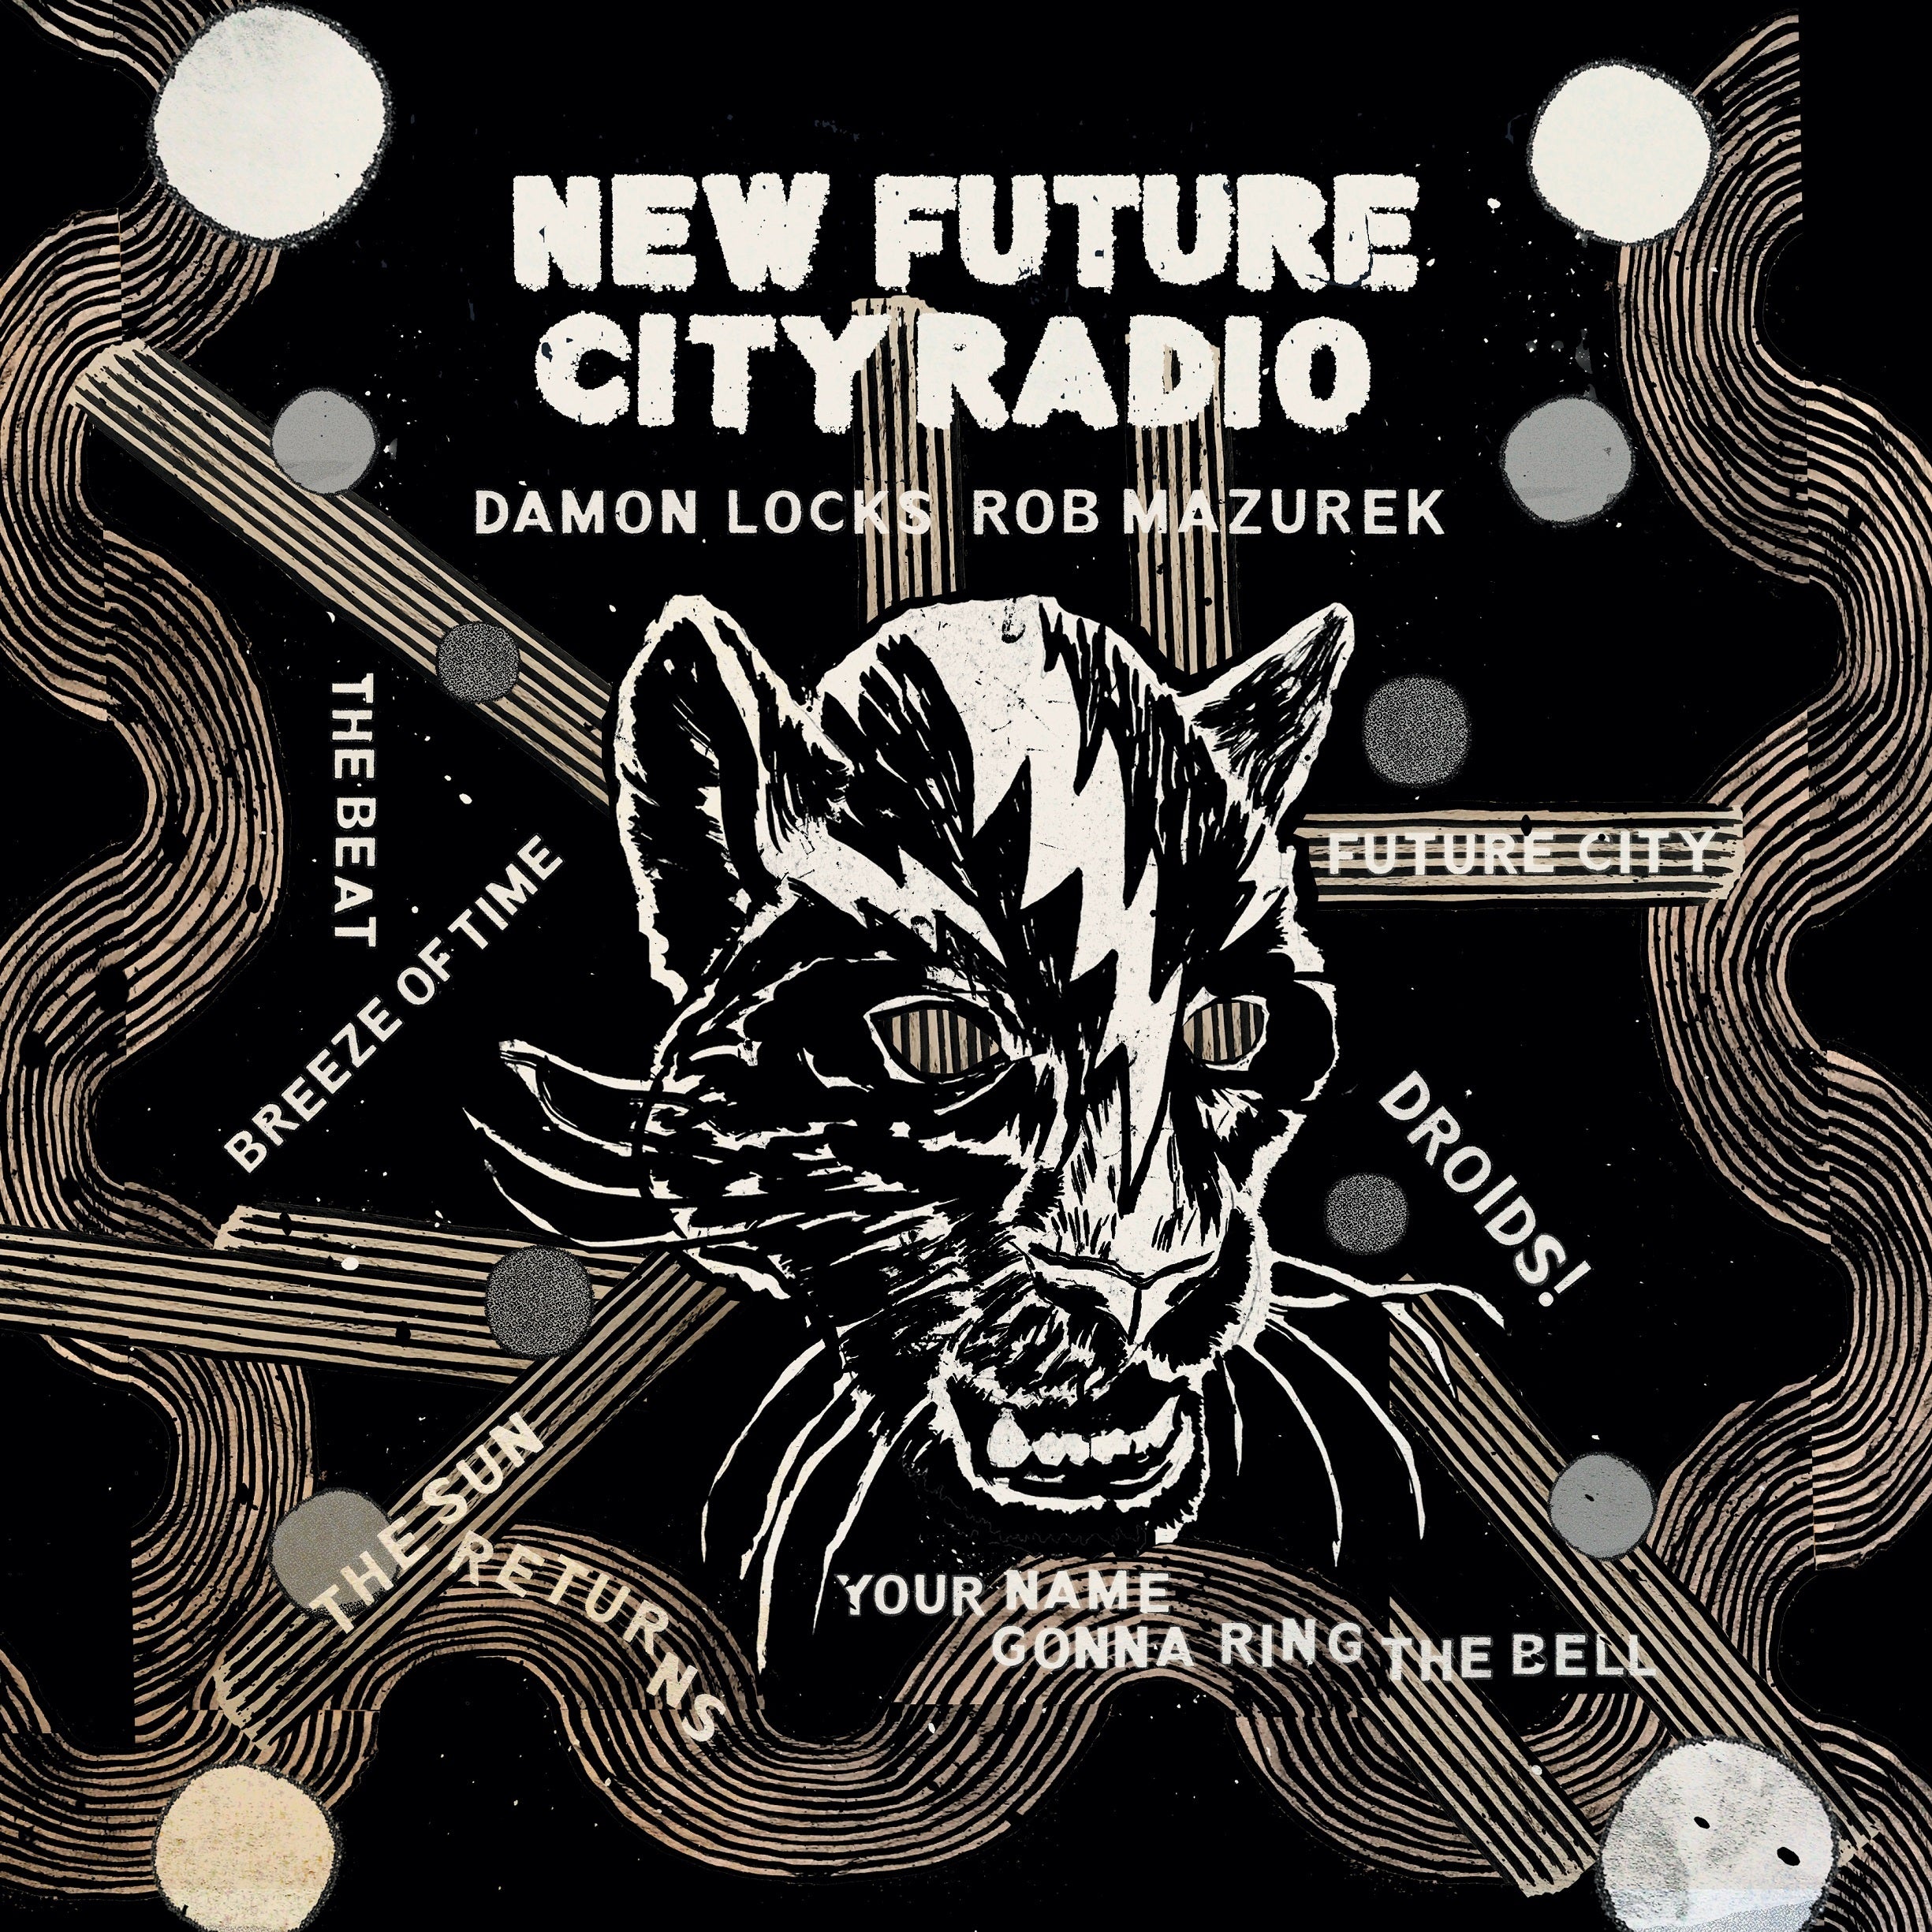 New Future City Radio: New Future City Shimmer Colour Vinyl LP